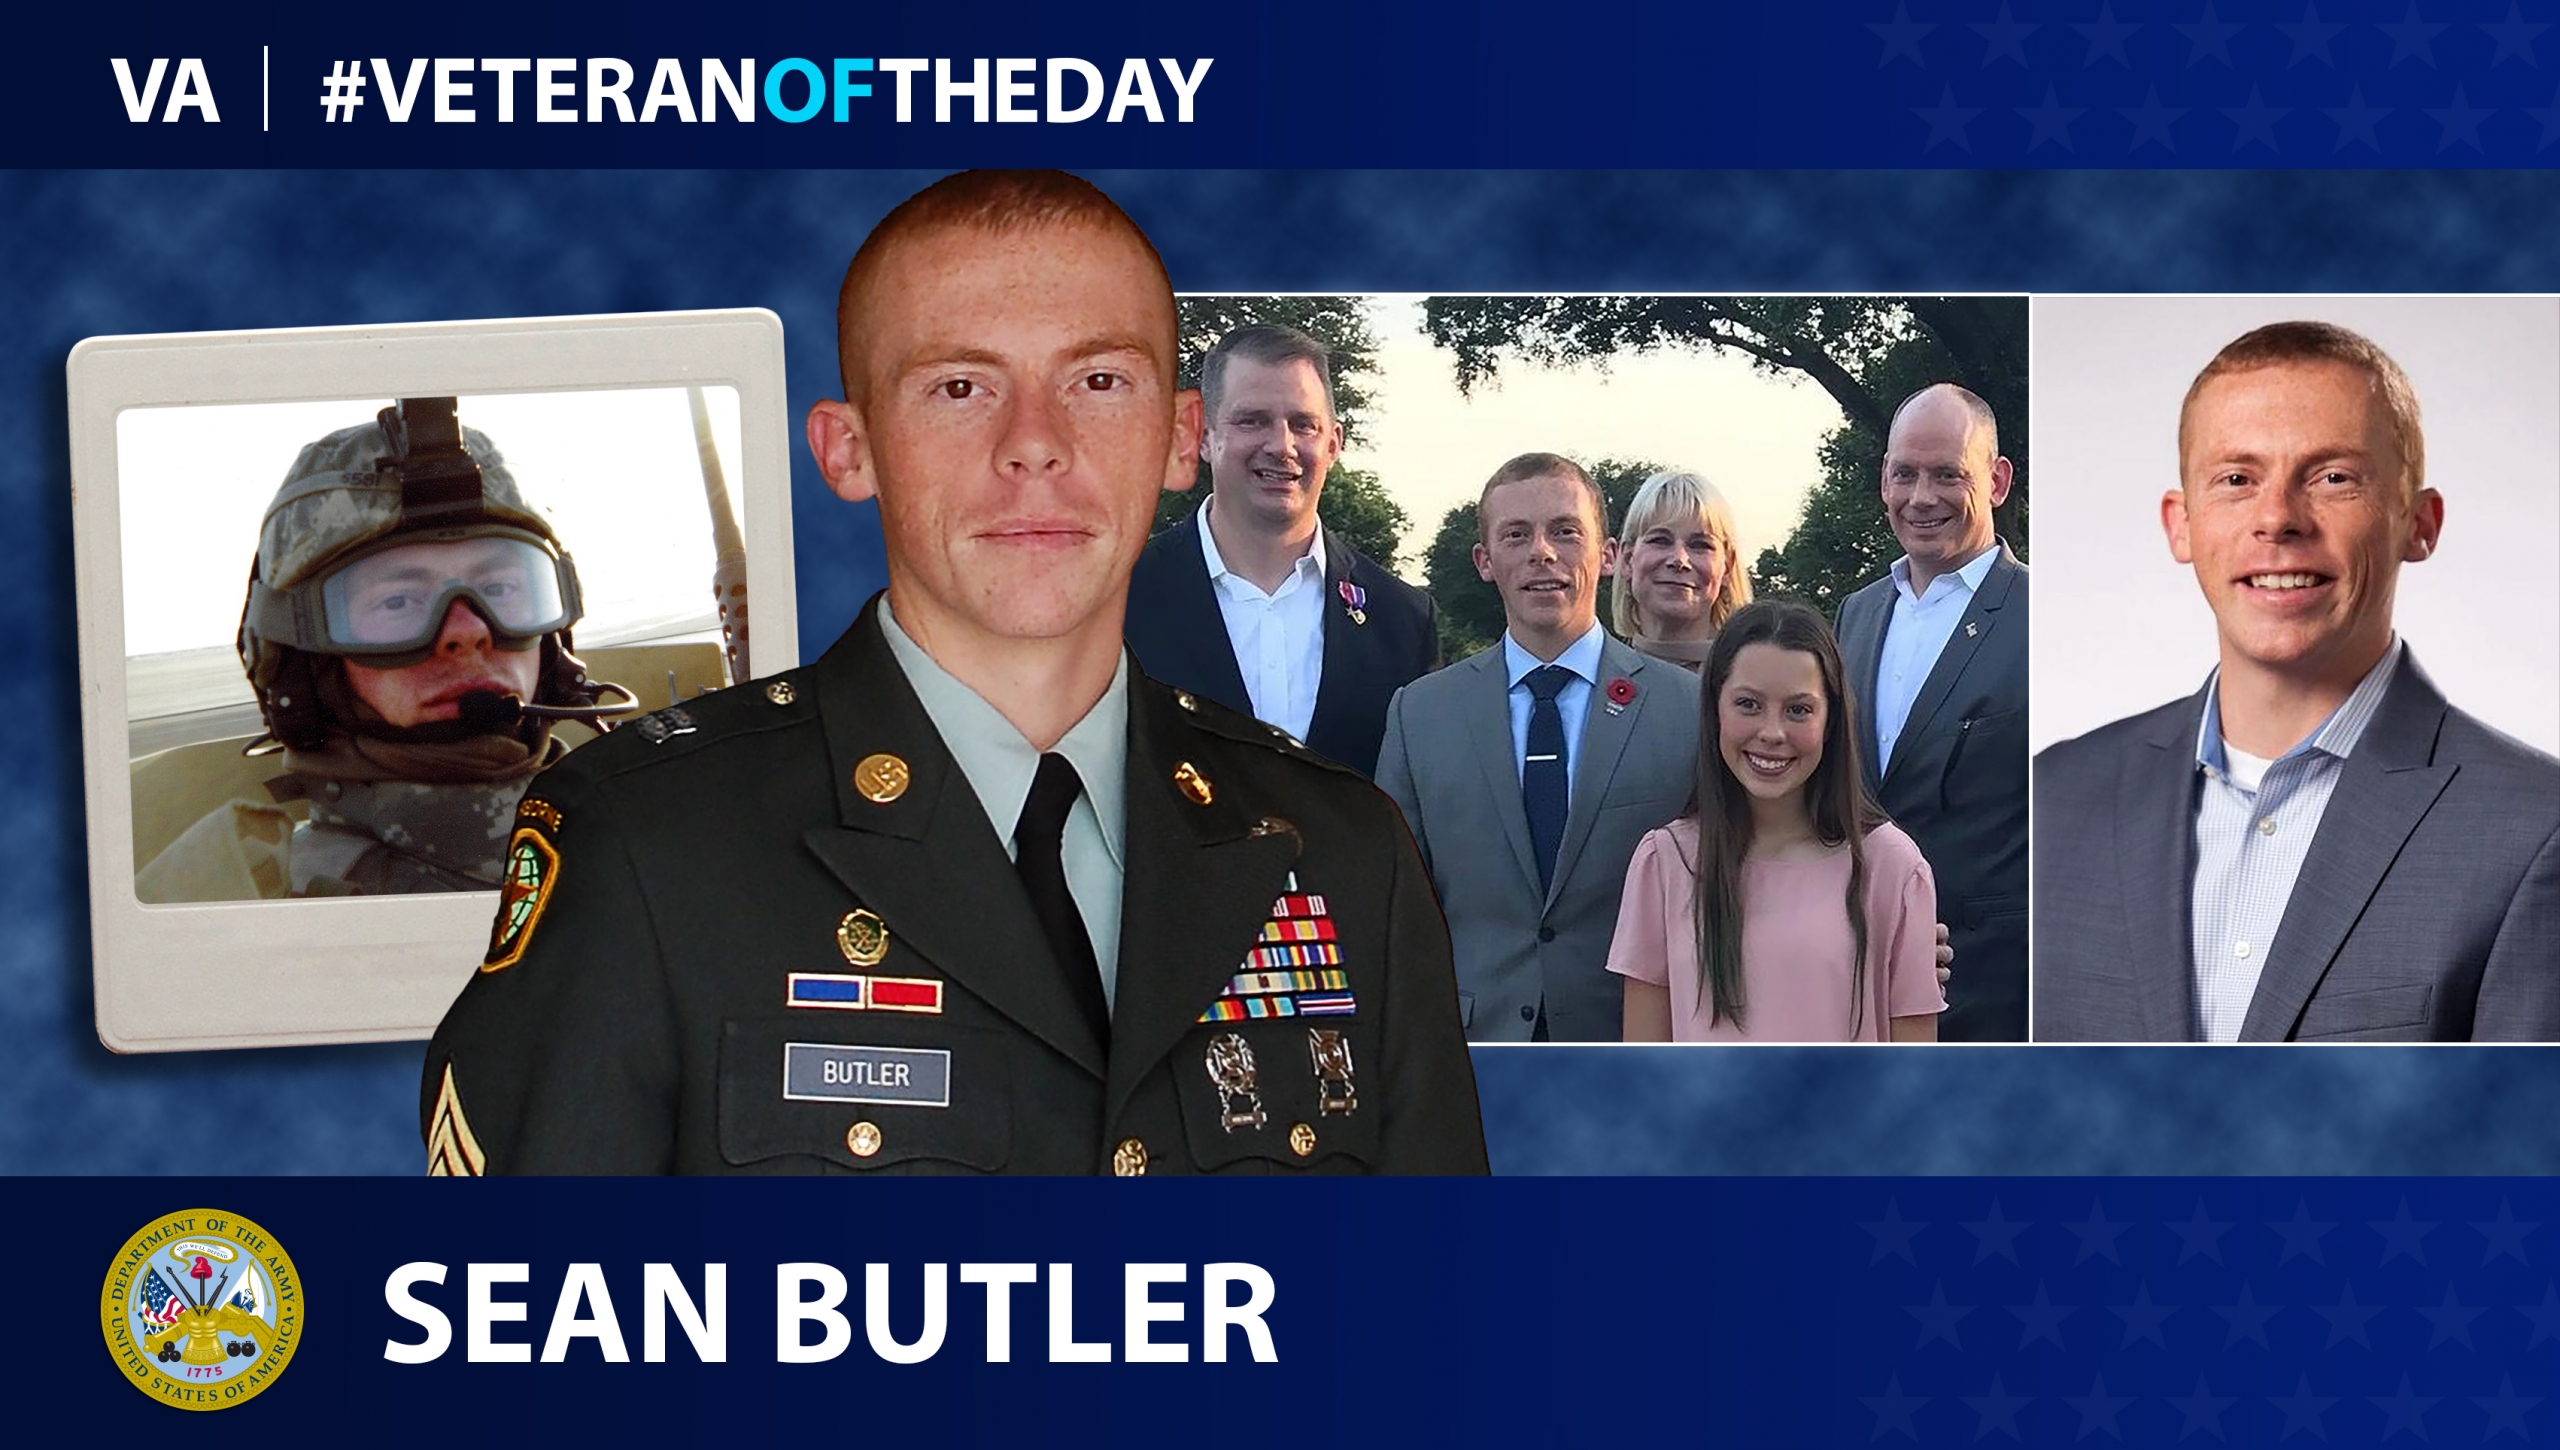 Army Veteran Sean Butler is today's #VeteranOfTheDay.